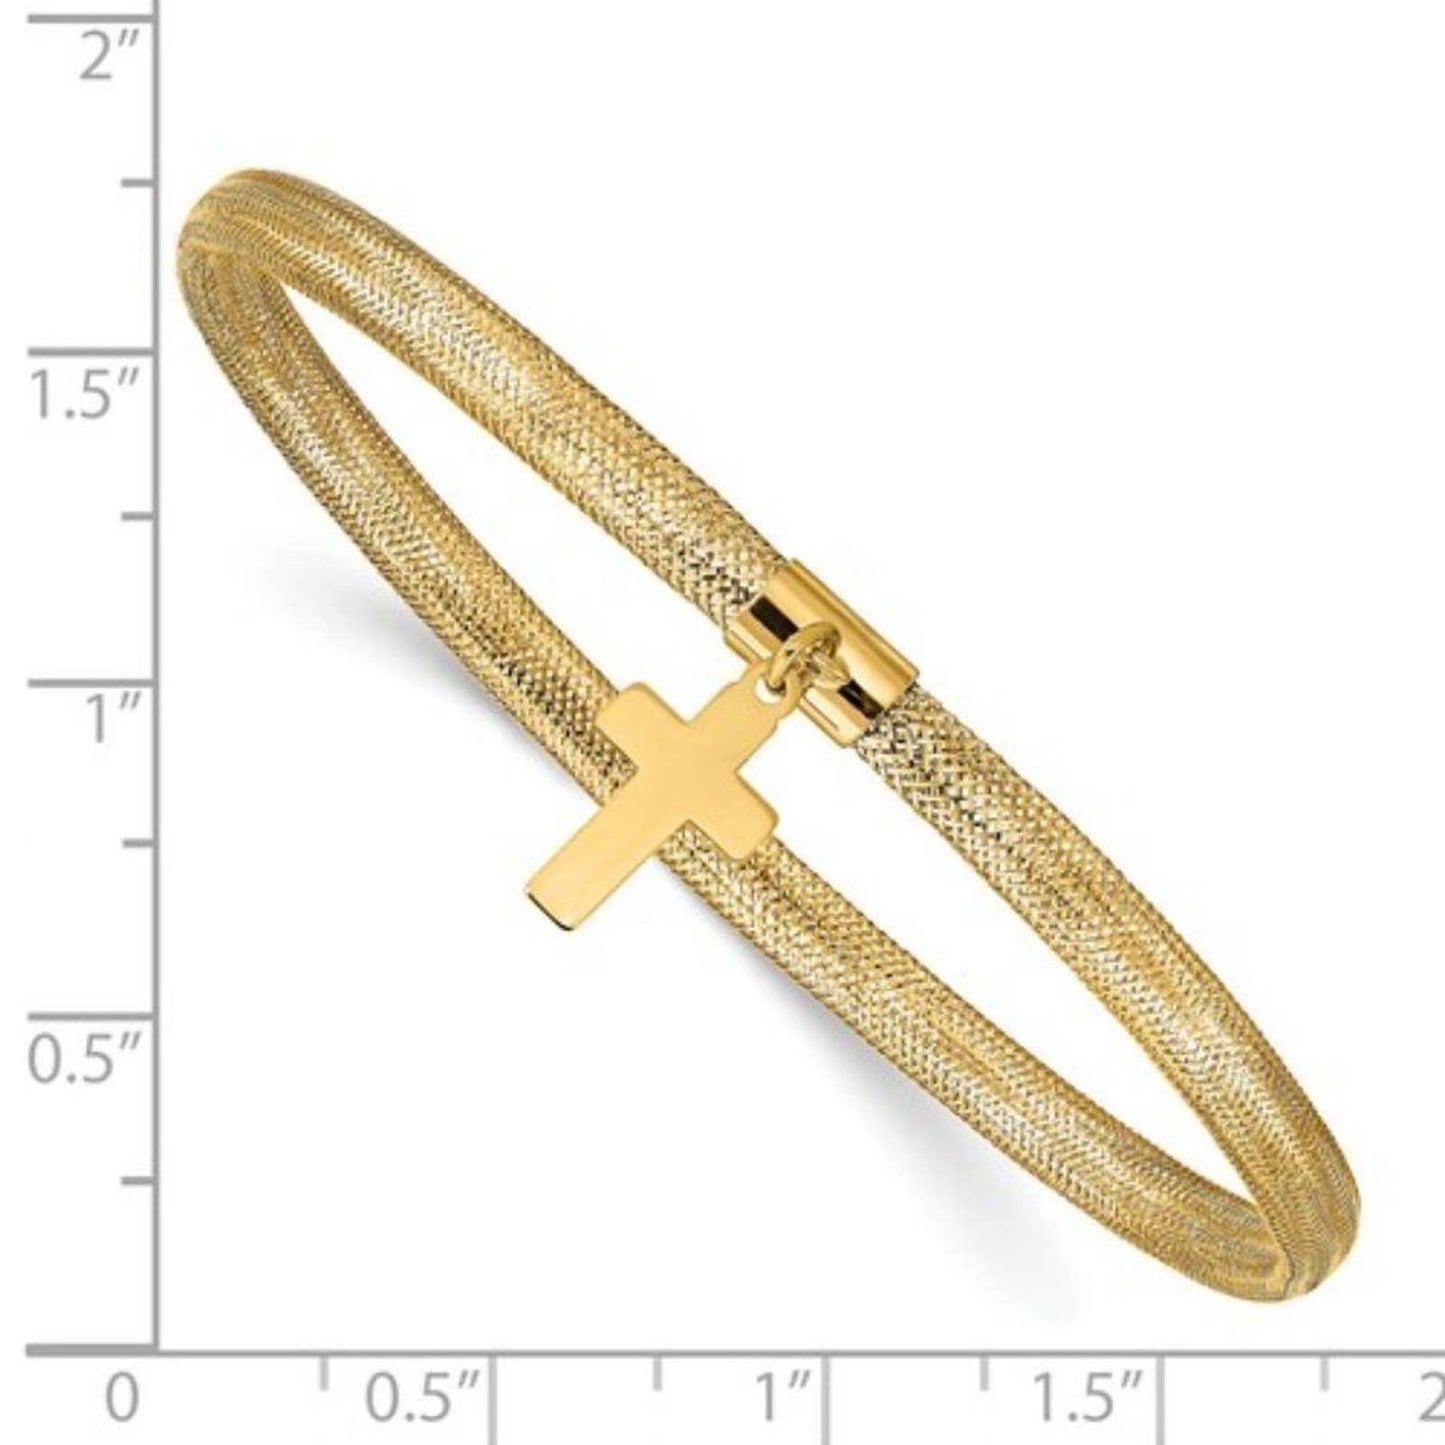 10k gold stretch mesh bracelet with cross charm